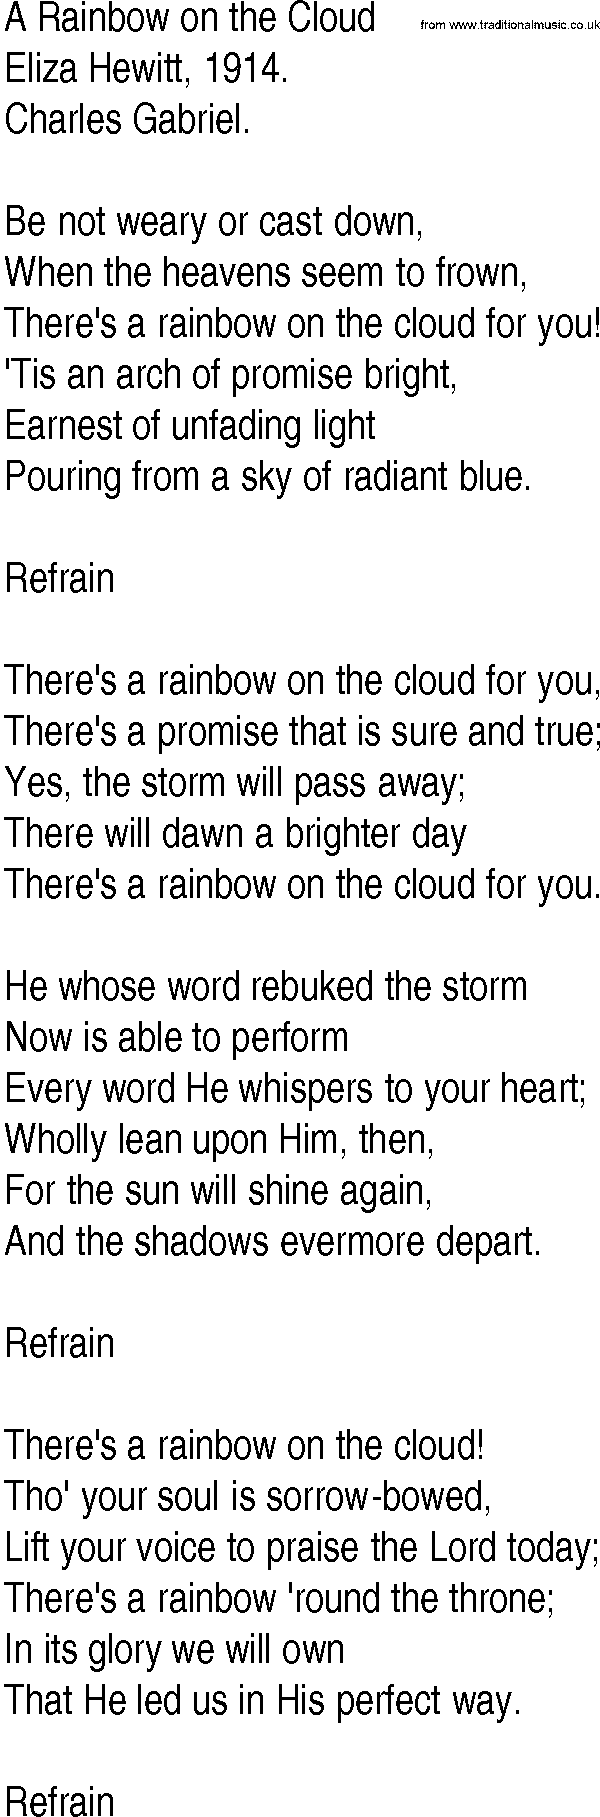 Hymn and Gospel Song: A Rainbow on the Cloud by Eliza Hewitt lyrics